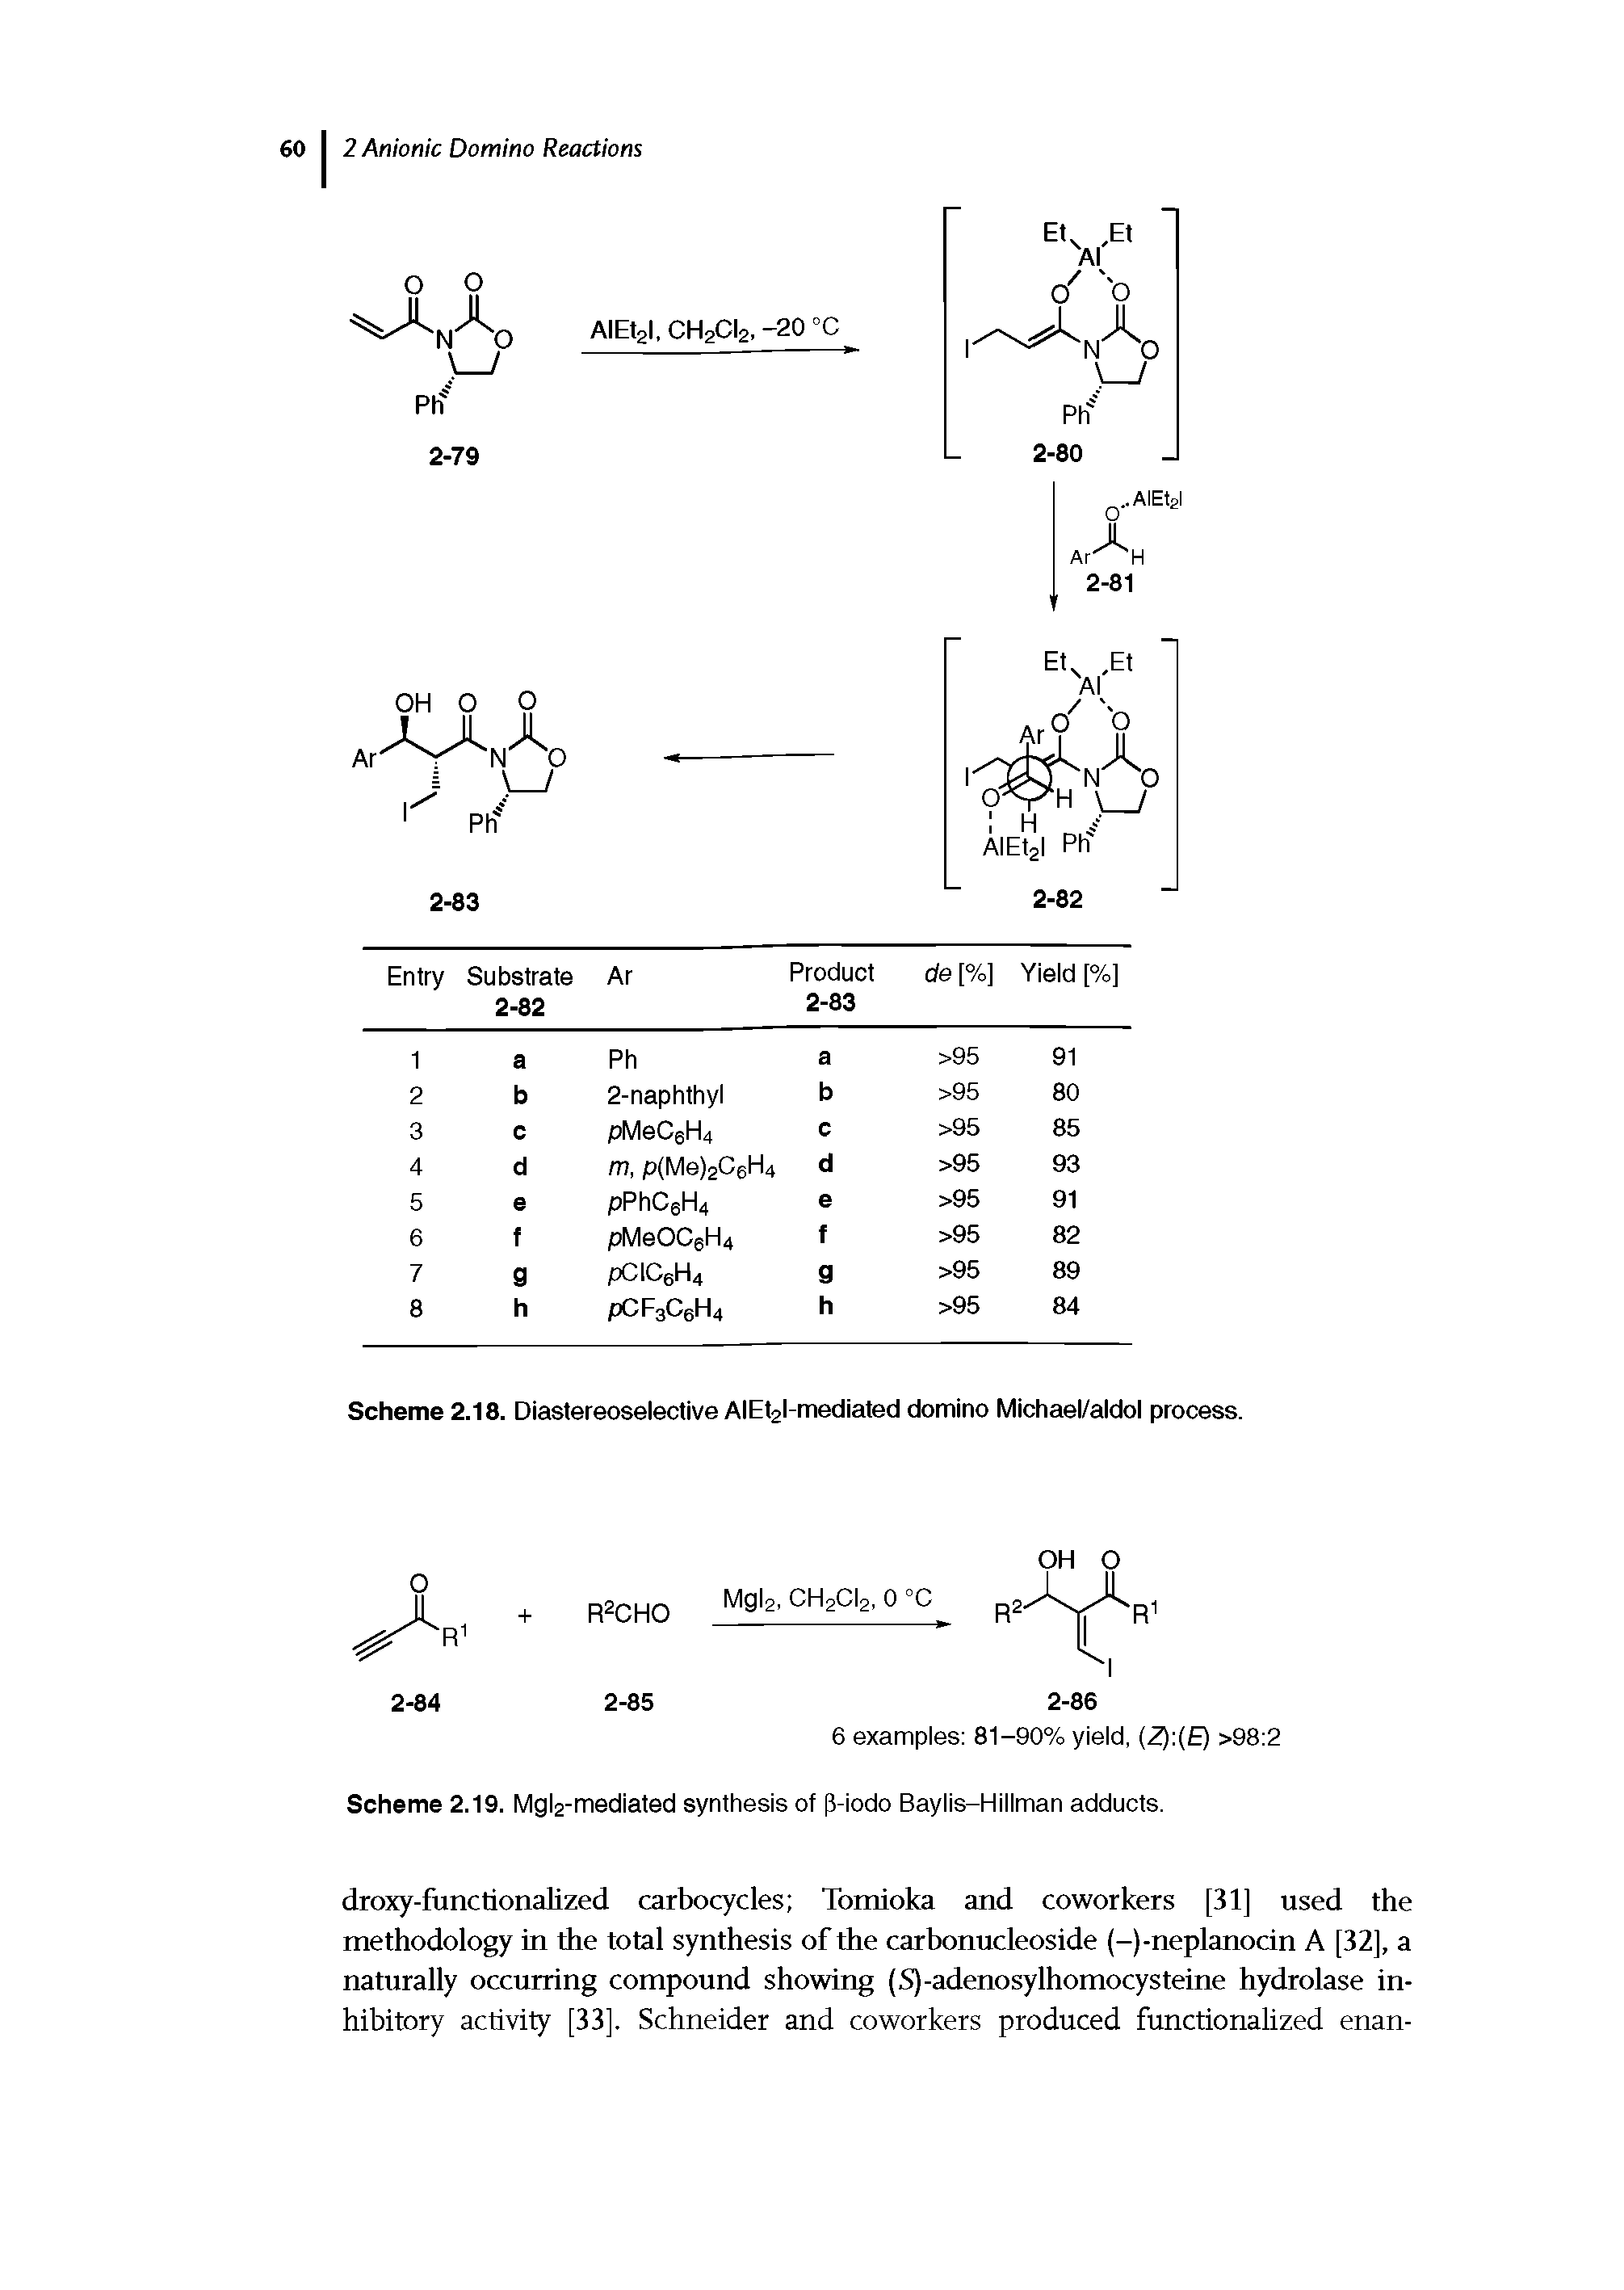 Scheme 2.18. Diastereoselective AIEt2l-mediated domino Michael/aldol process.